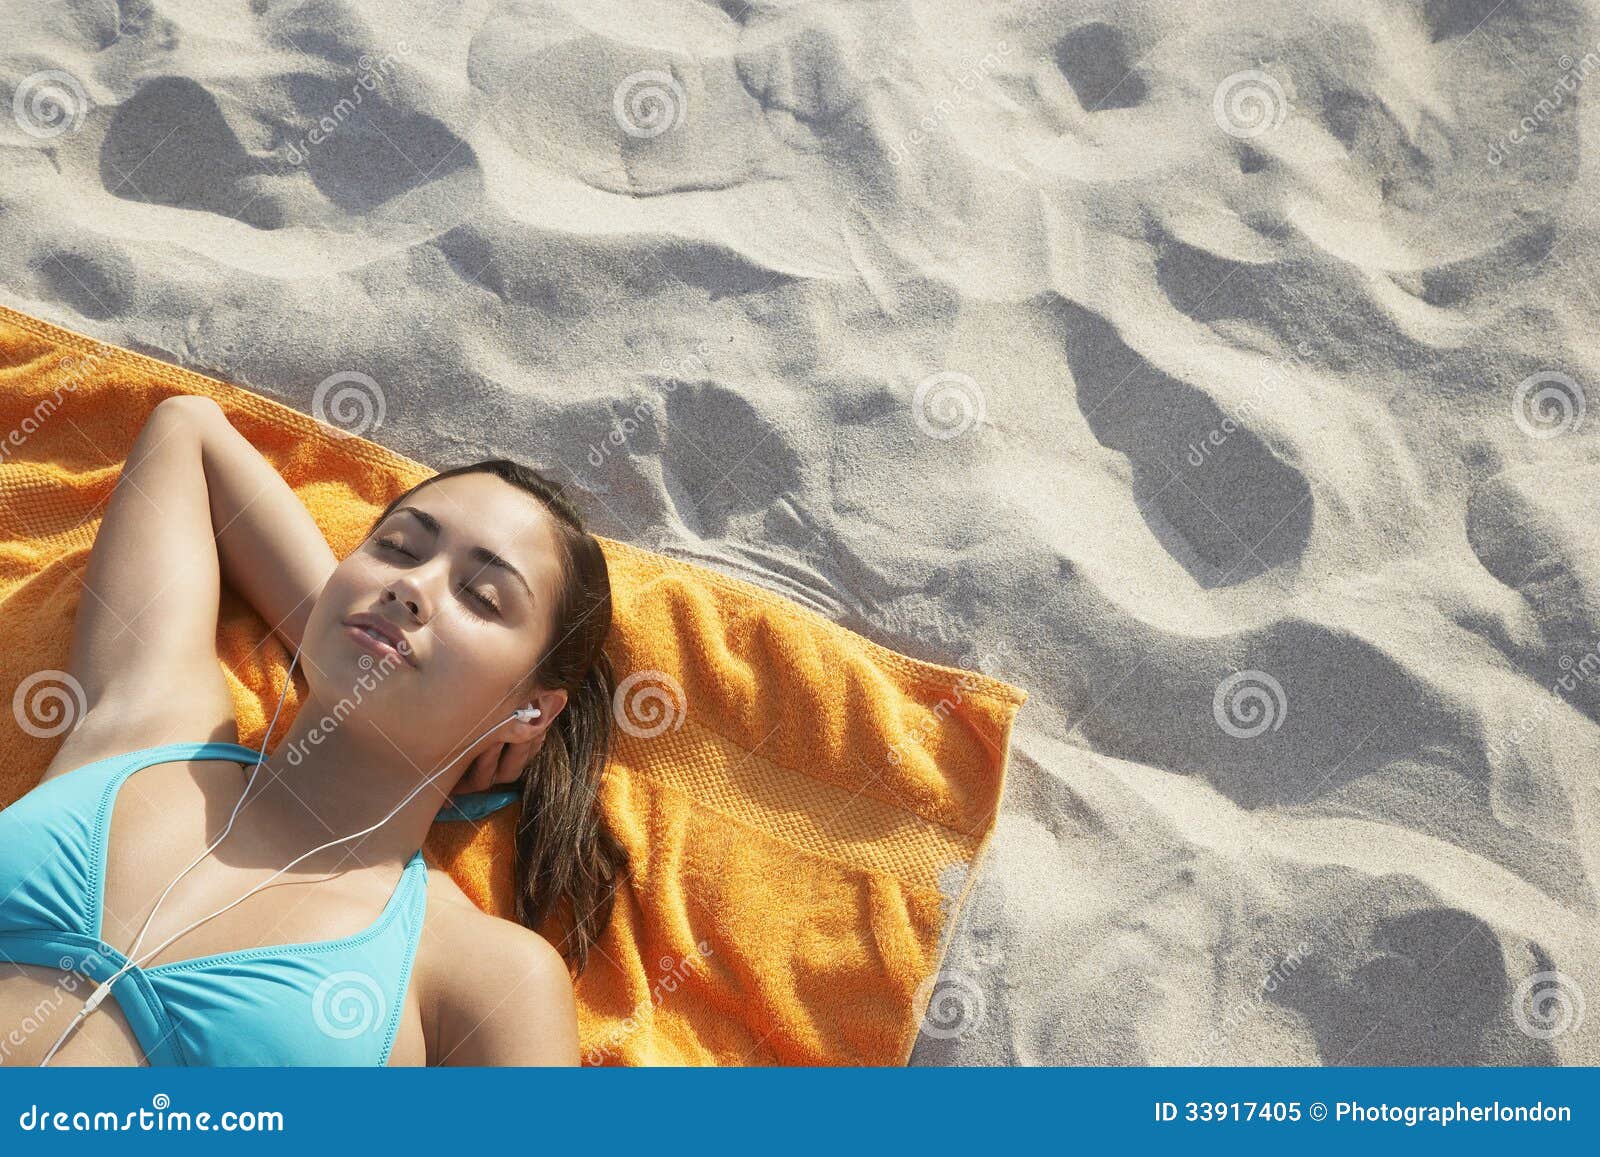 12,480 Bikini Girl Lying Beach Stock Photos